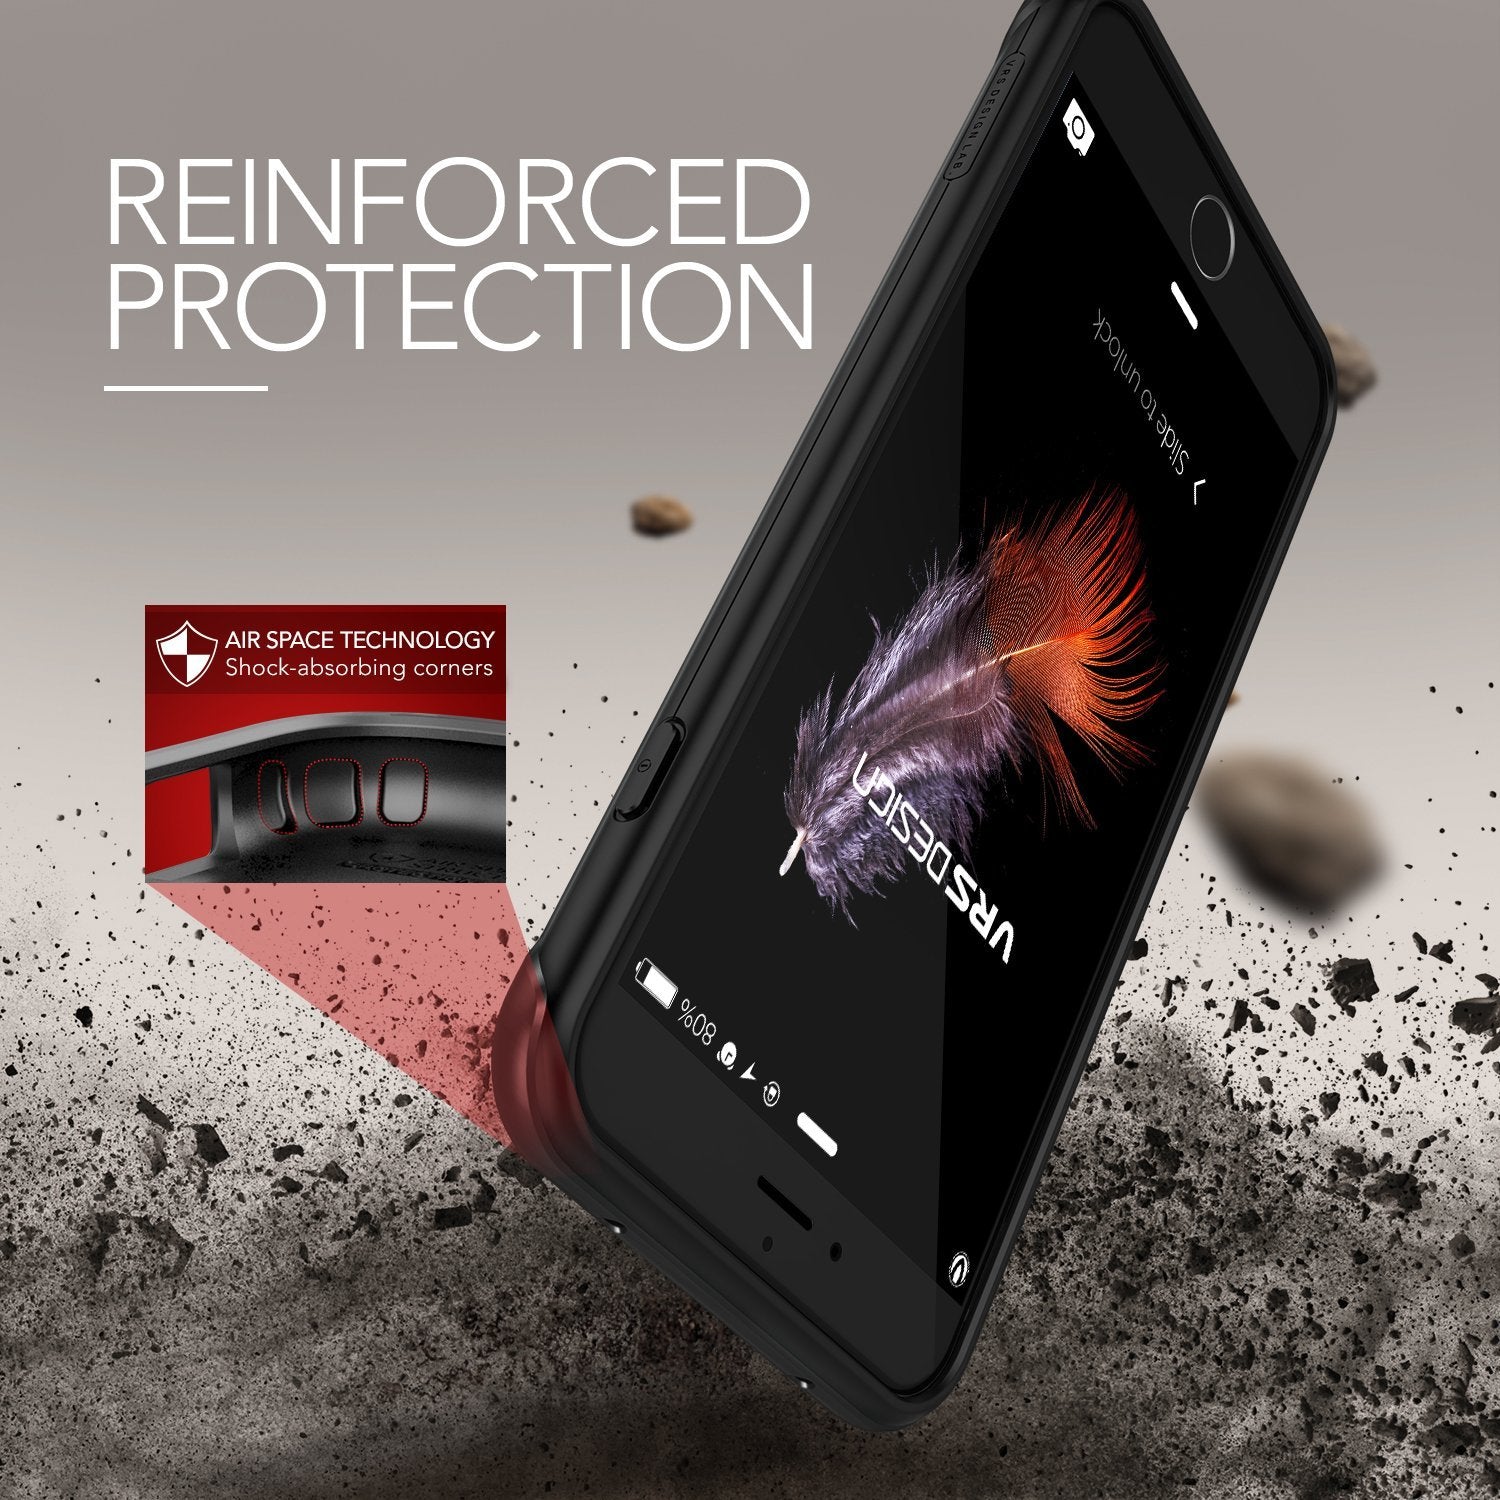 DUO Guard Series Original From VRS Design Anti-shocks Case For iPhone 7 Plus Black